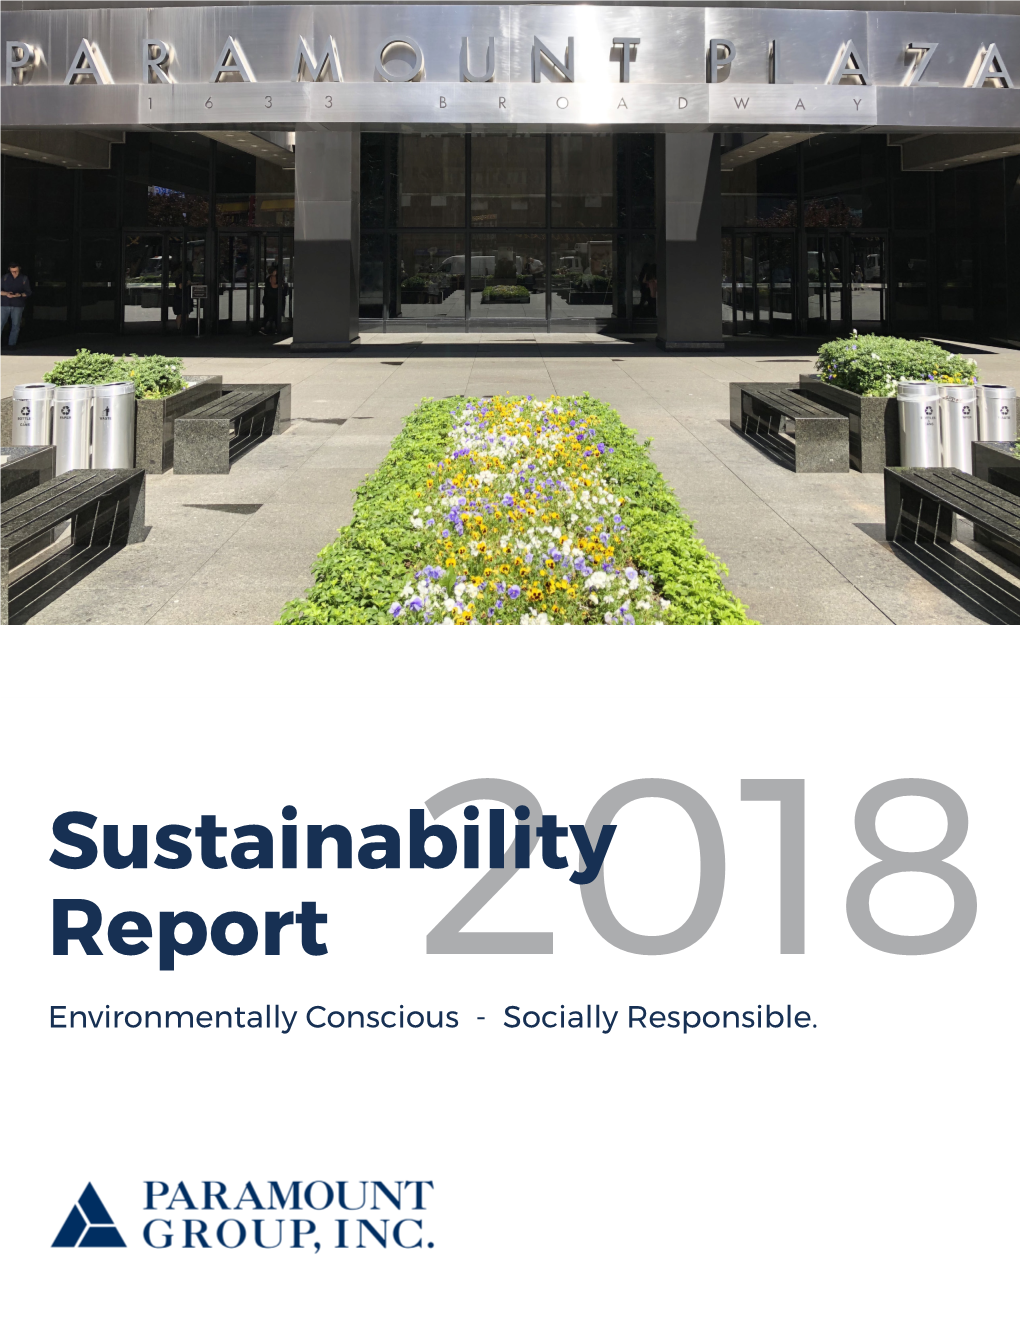 Sustainability Report Environmentally Conscious2018 - Socially Responsible